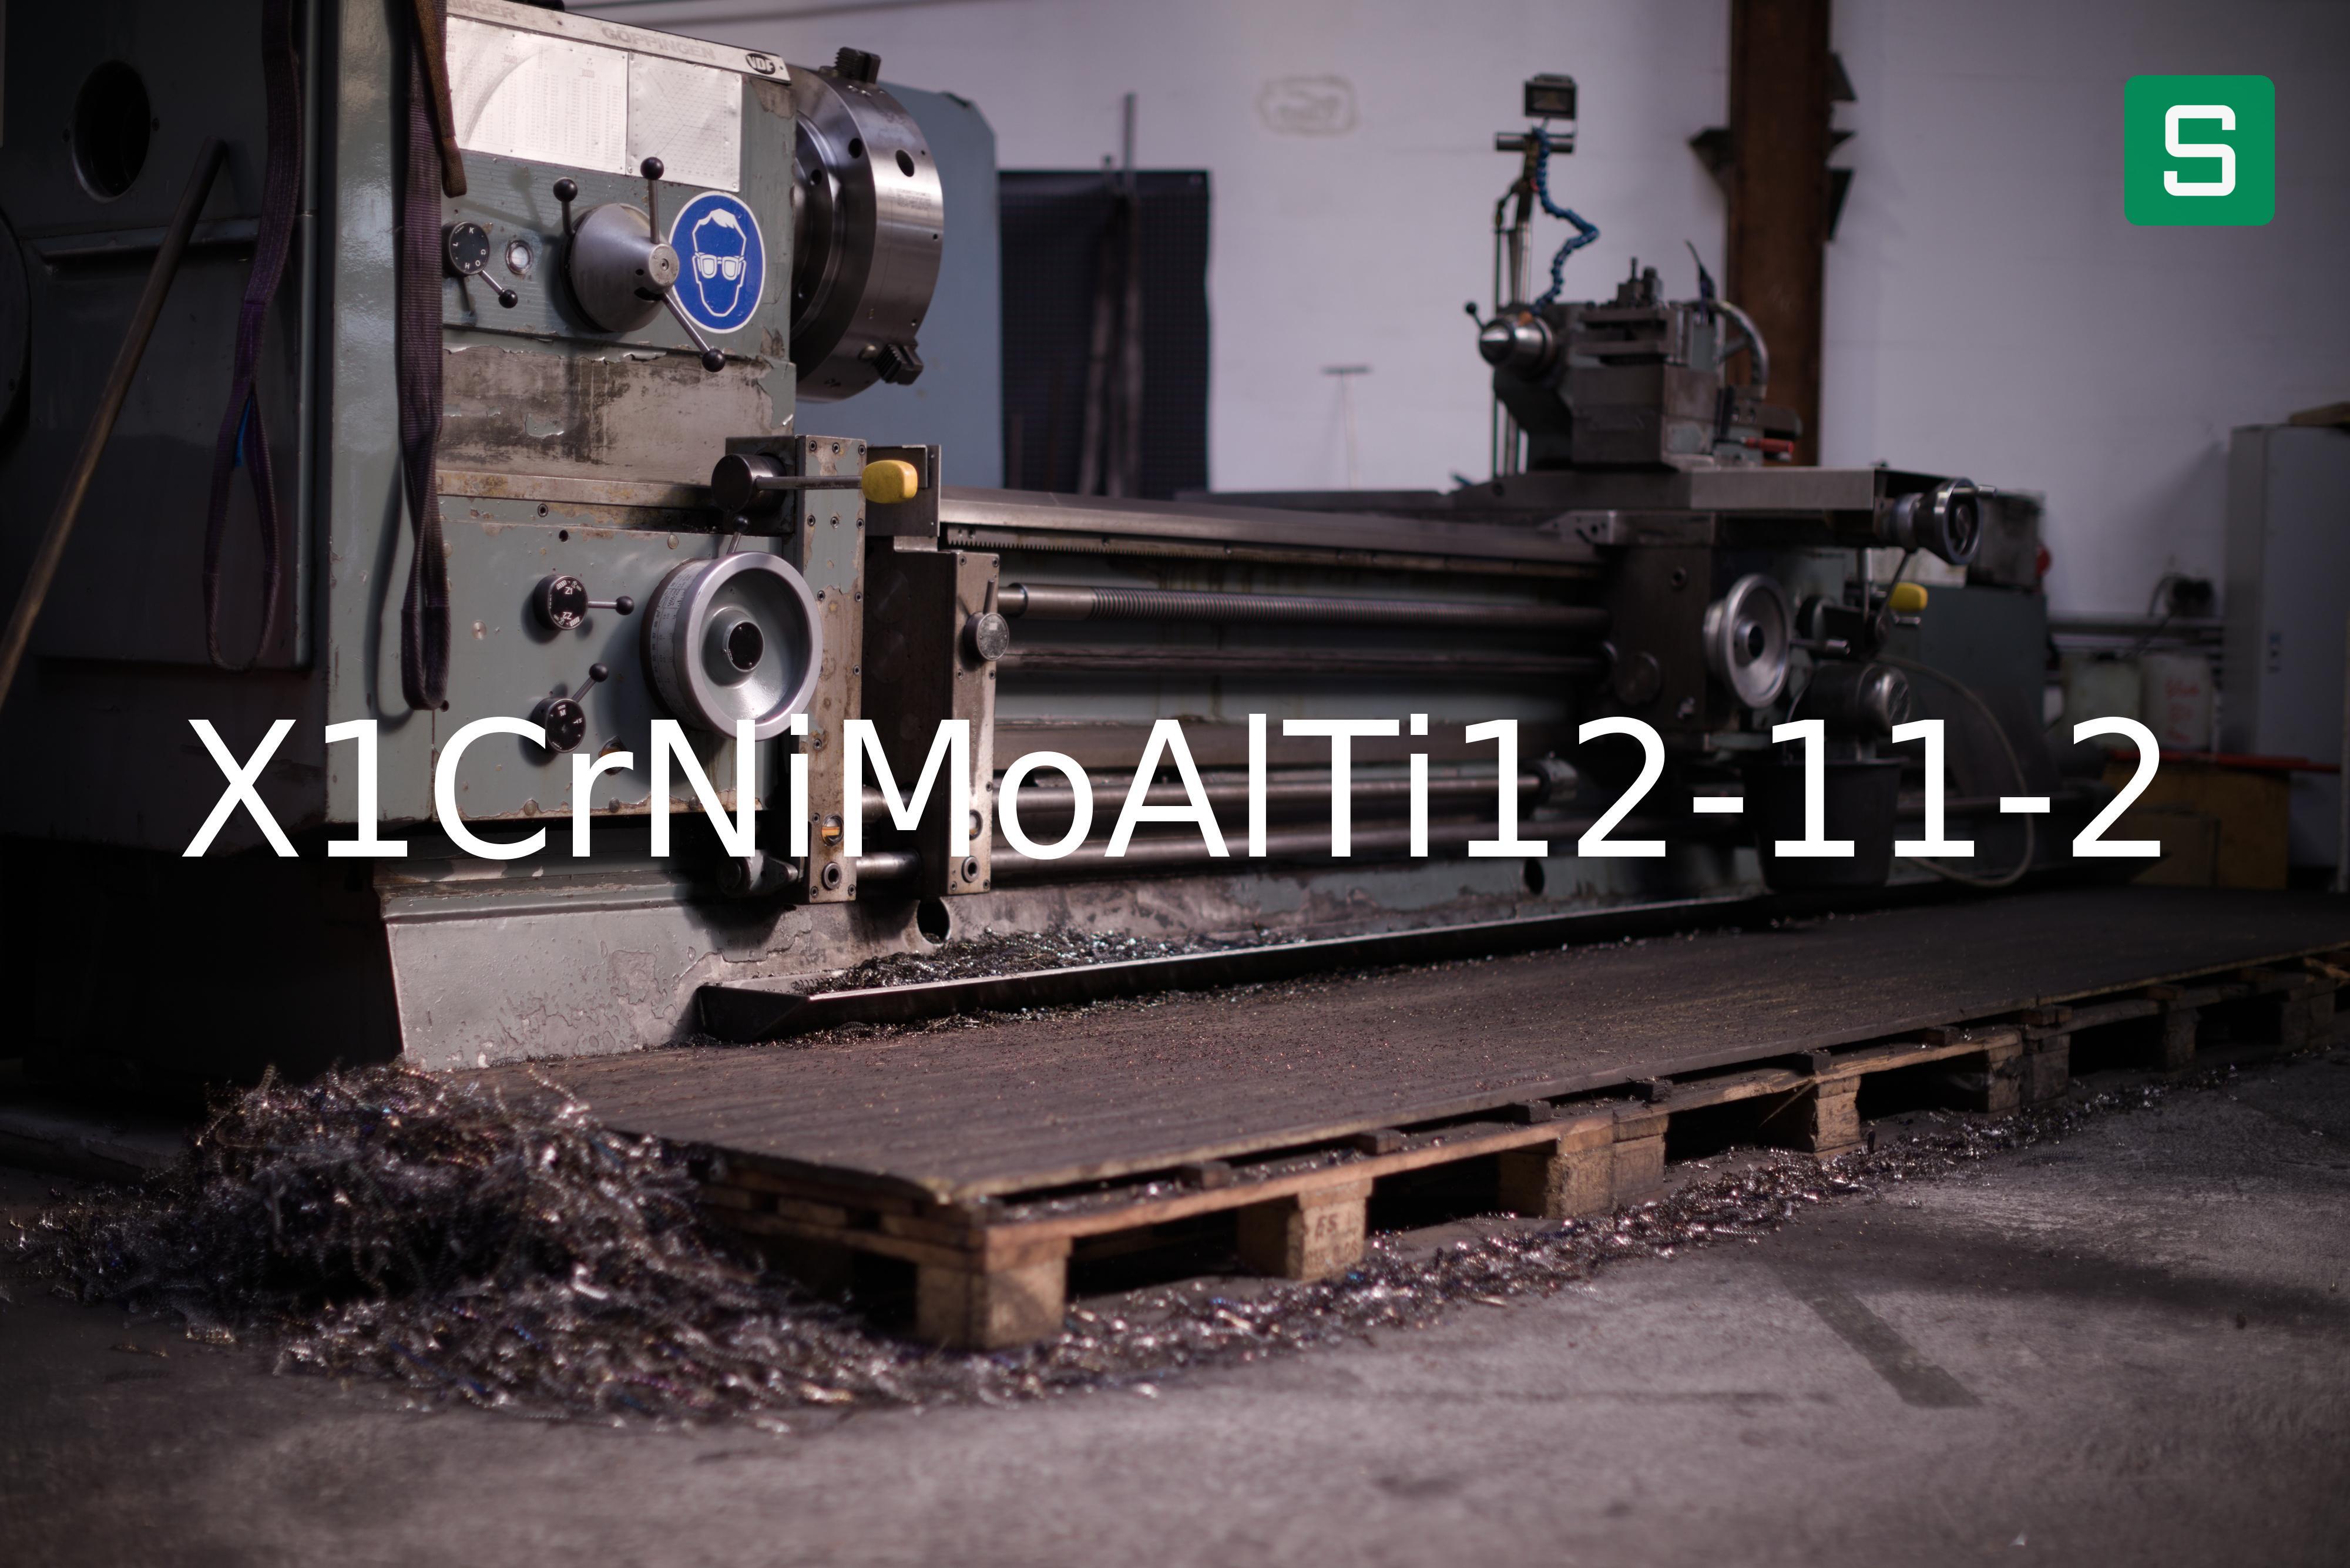 Steel Material: X1CrNiMoAlTi12-11-2